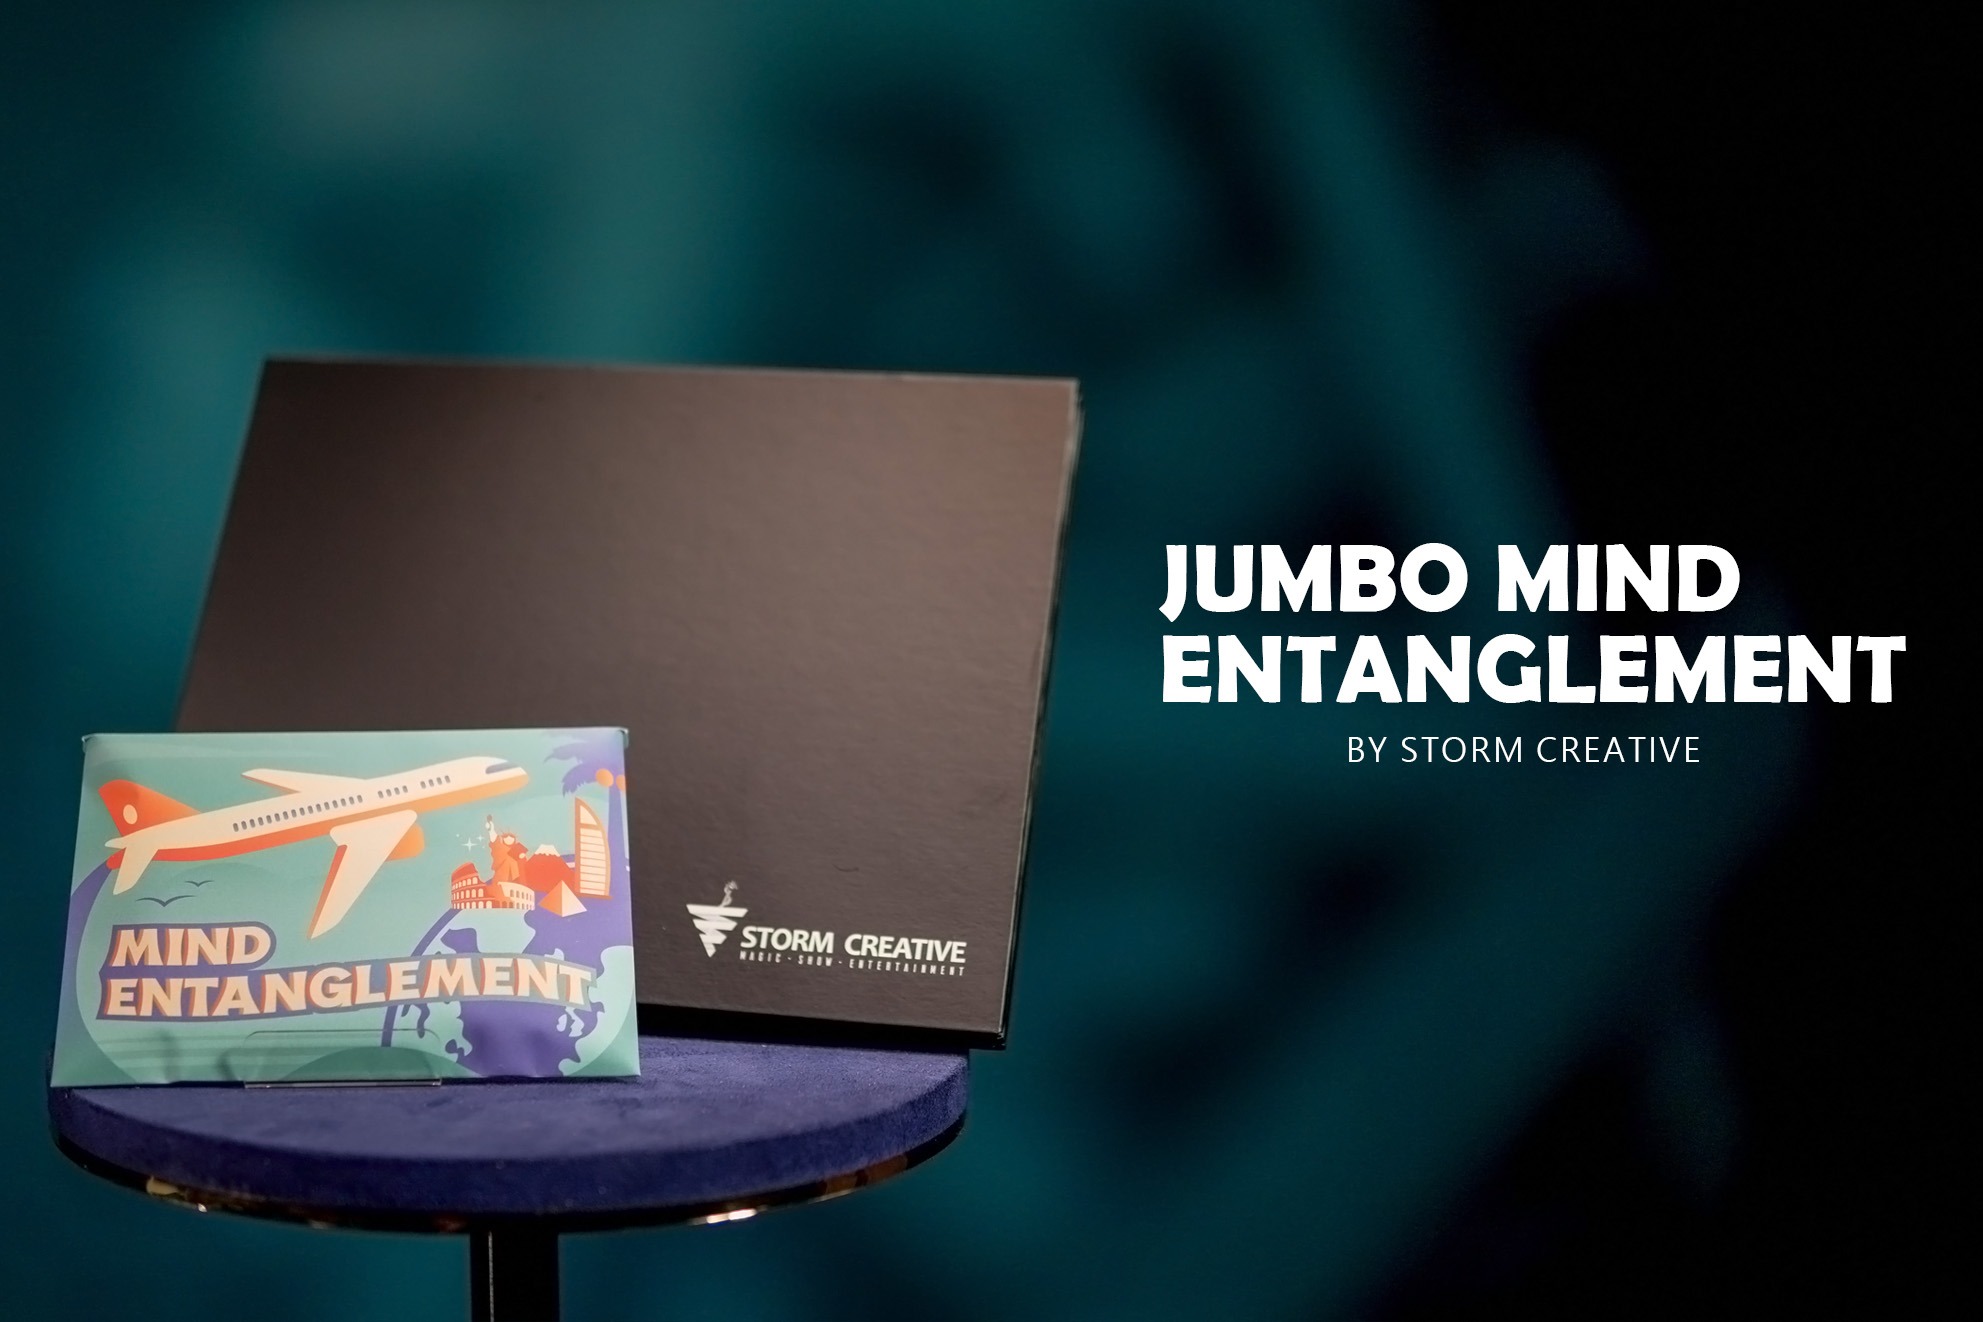 Jumbo Mind Entanglement by Hank &amp; Joseph LeeJumbo Mind Entanglement by Hank &amp; Joseph Lee